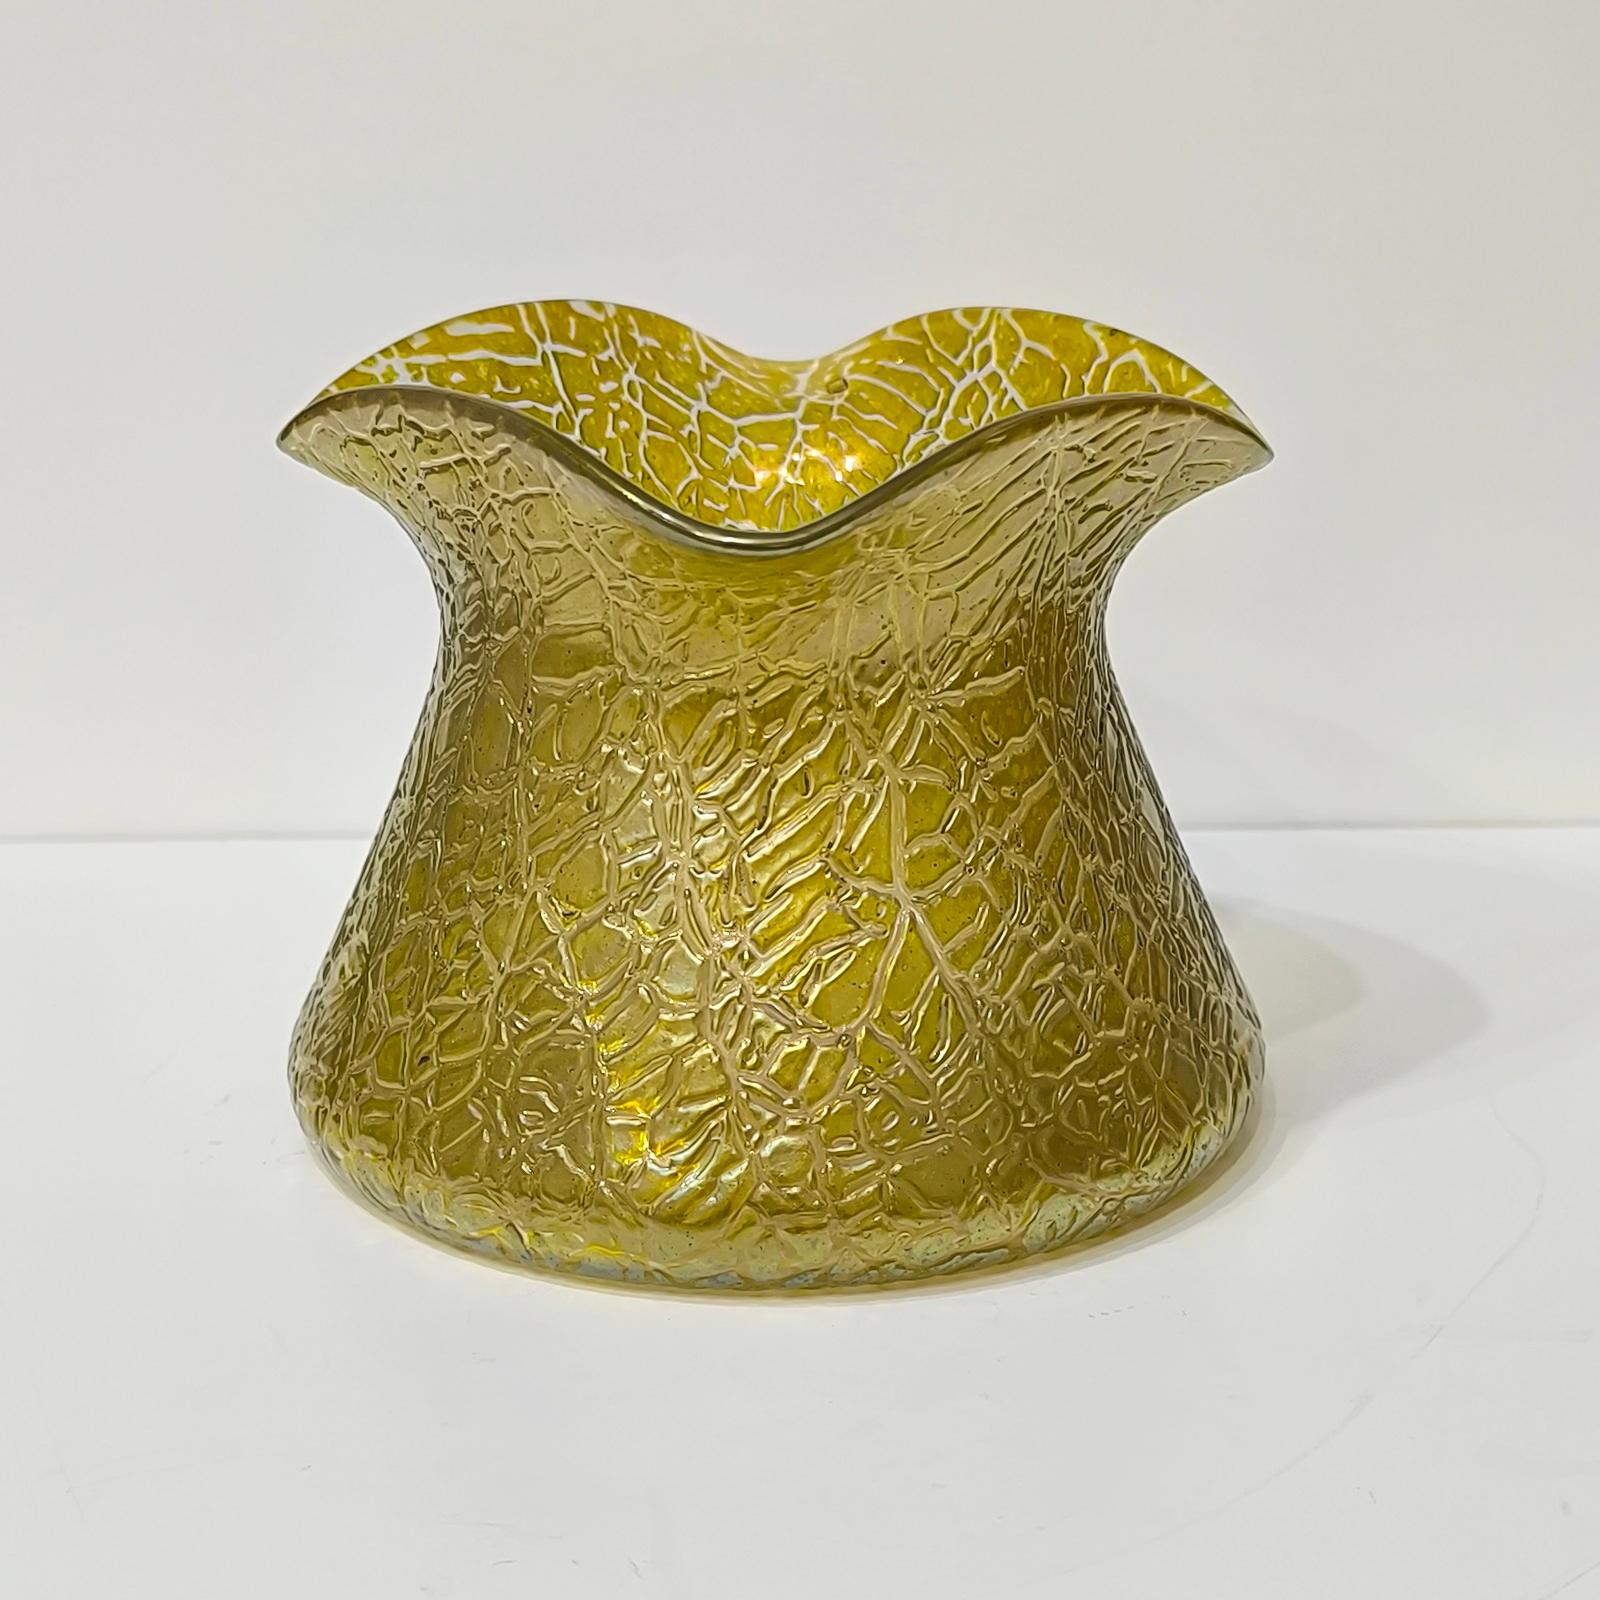 Loetz Candia Mimoza Art Nouveau Jugendstil Art Glass Bowl For Sale 2